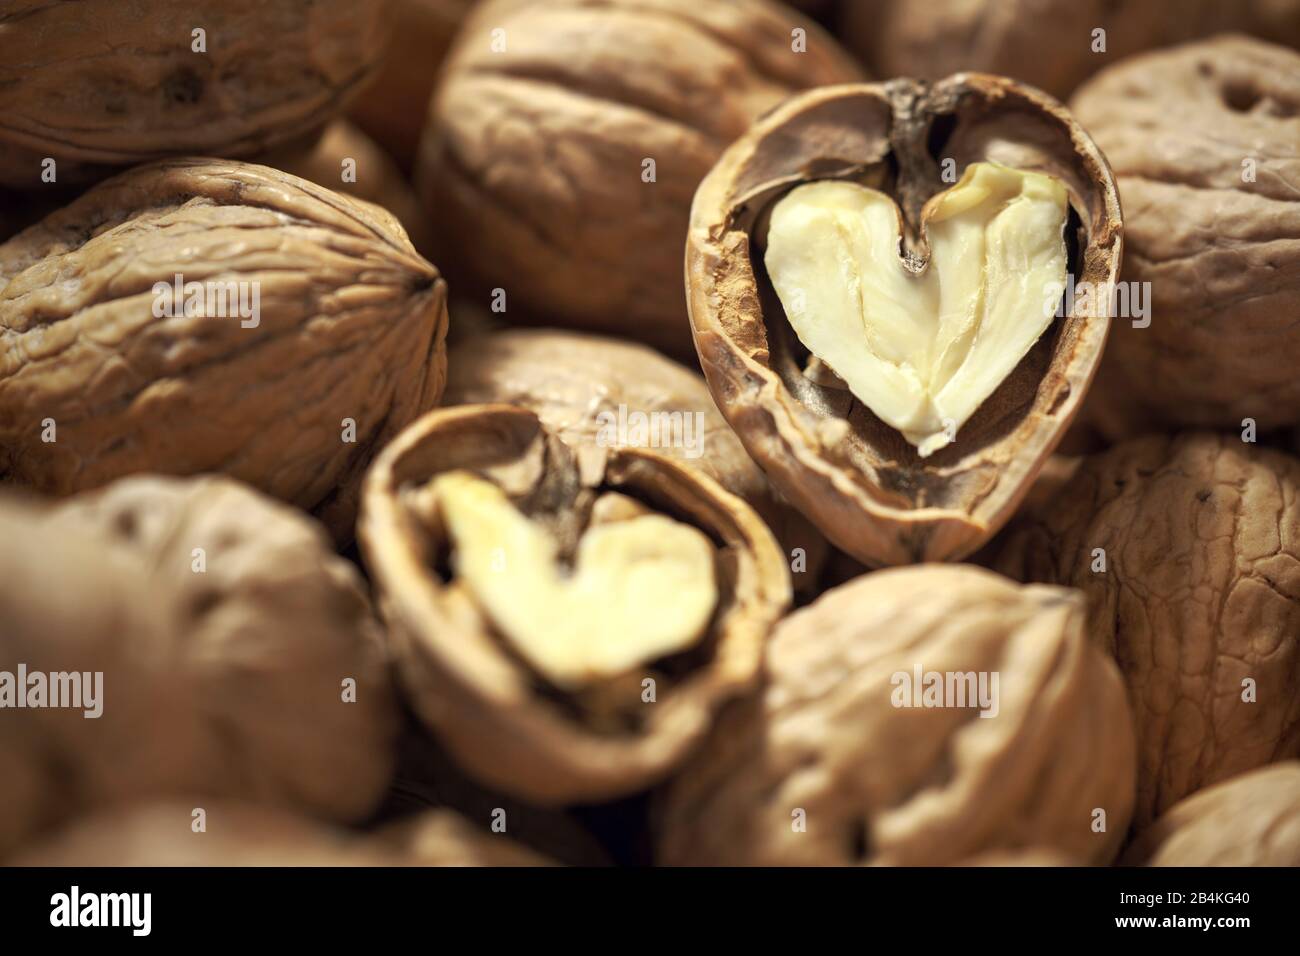 walnuts ready to eat, inside the heart-shaped kernel Stock Photo